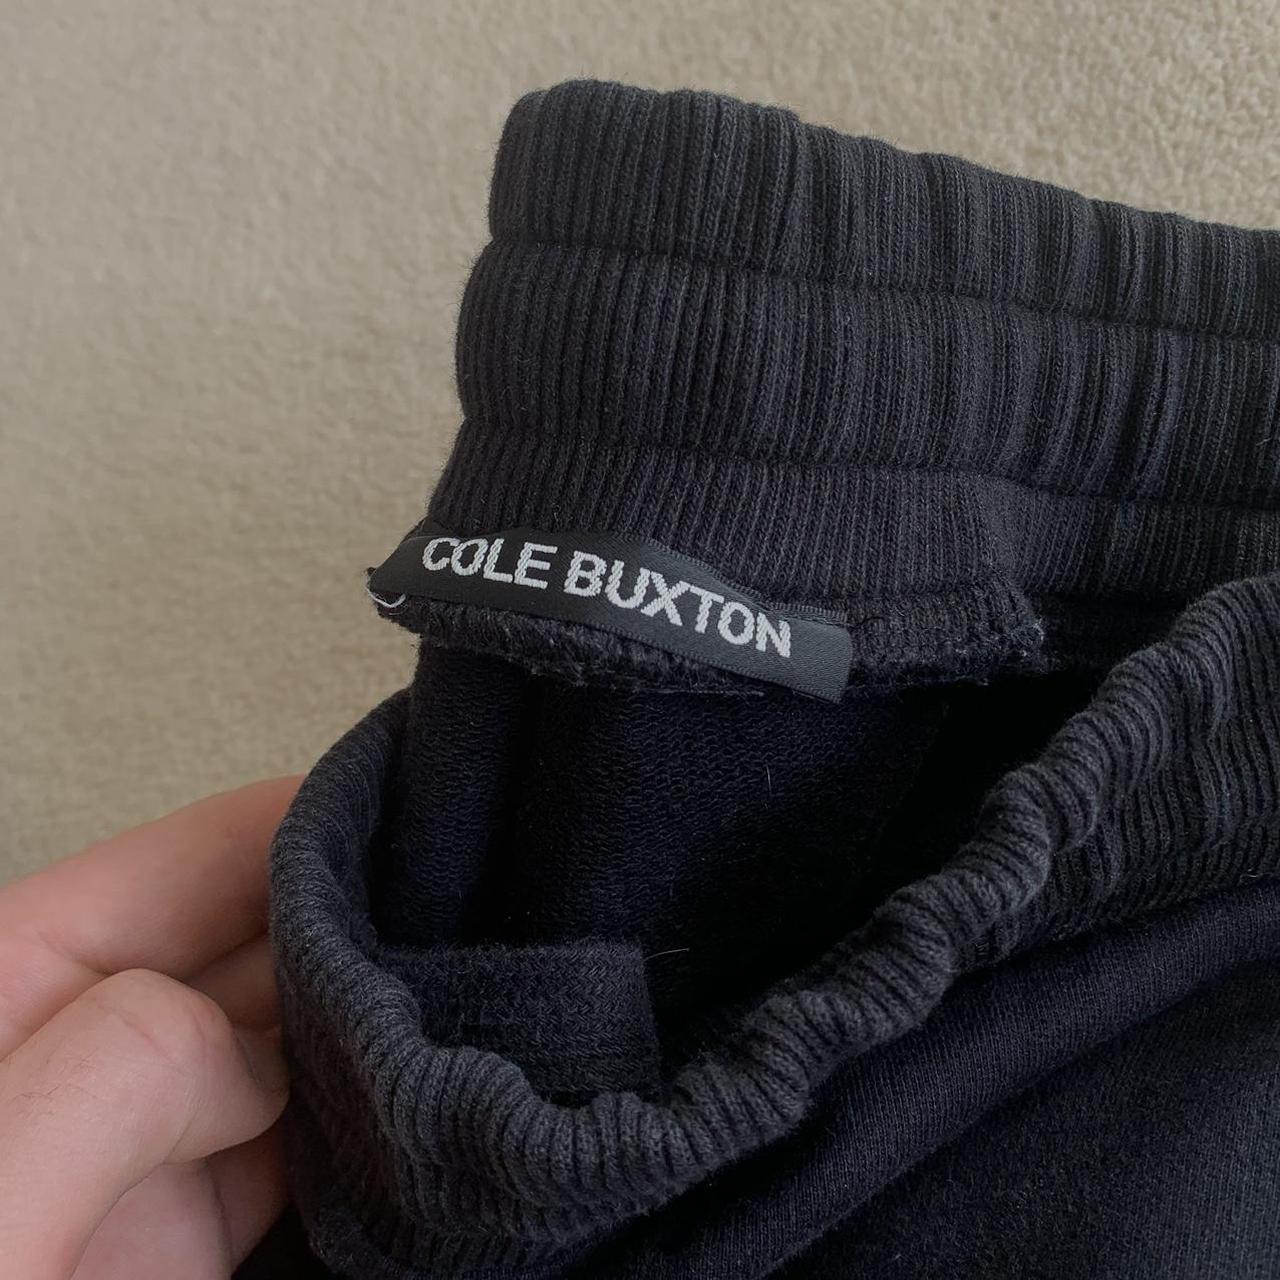 Cole buxton joggers Black colour Tight cuffs Size... - Depop